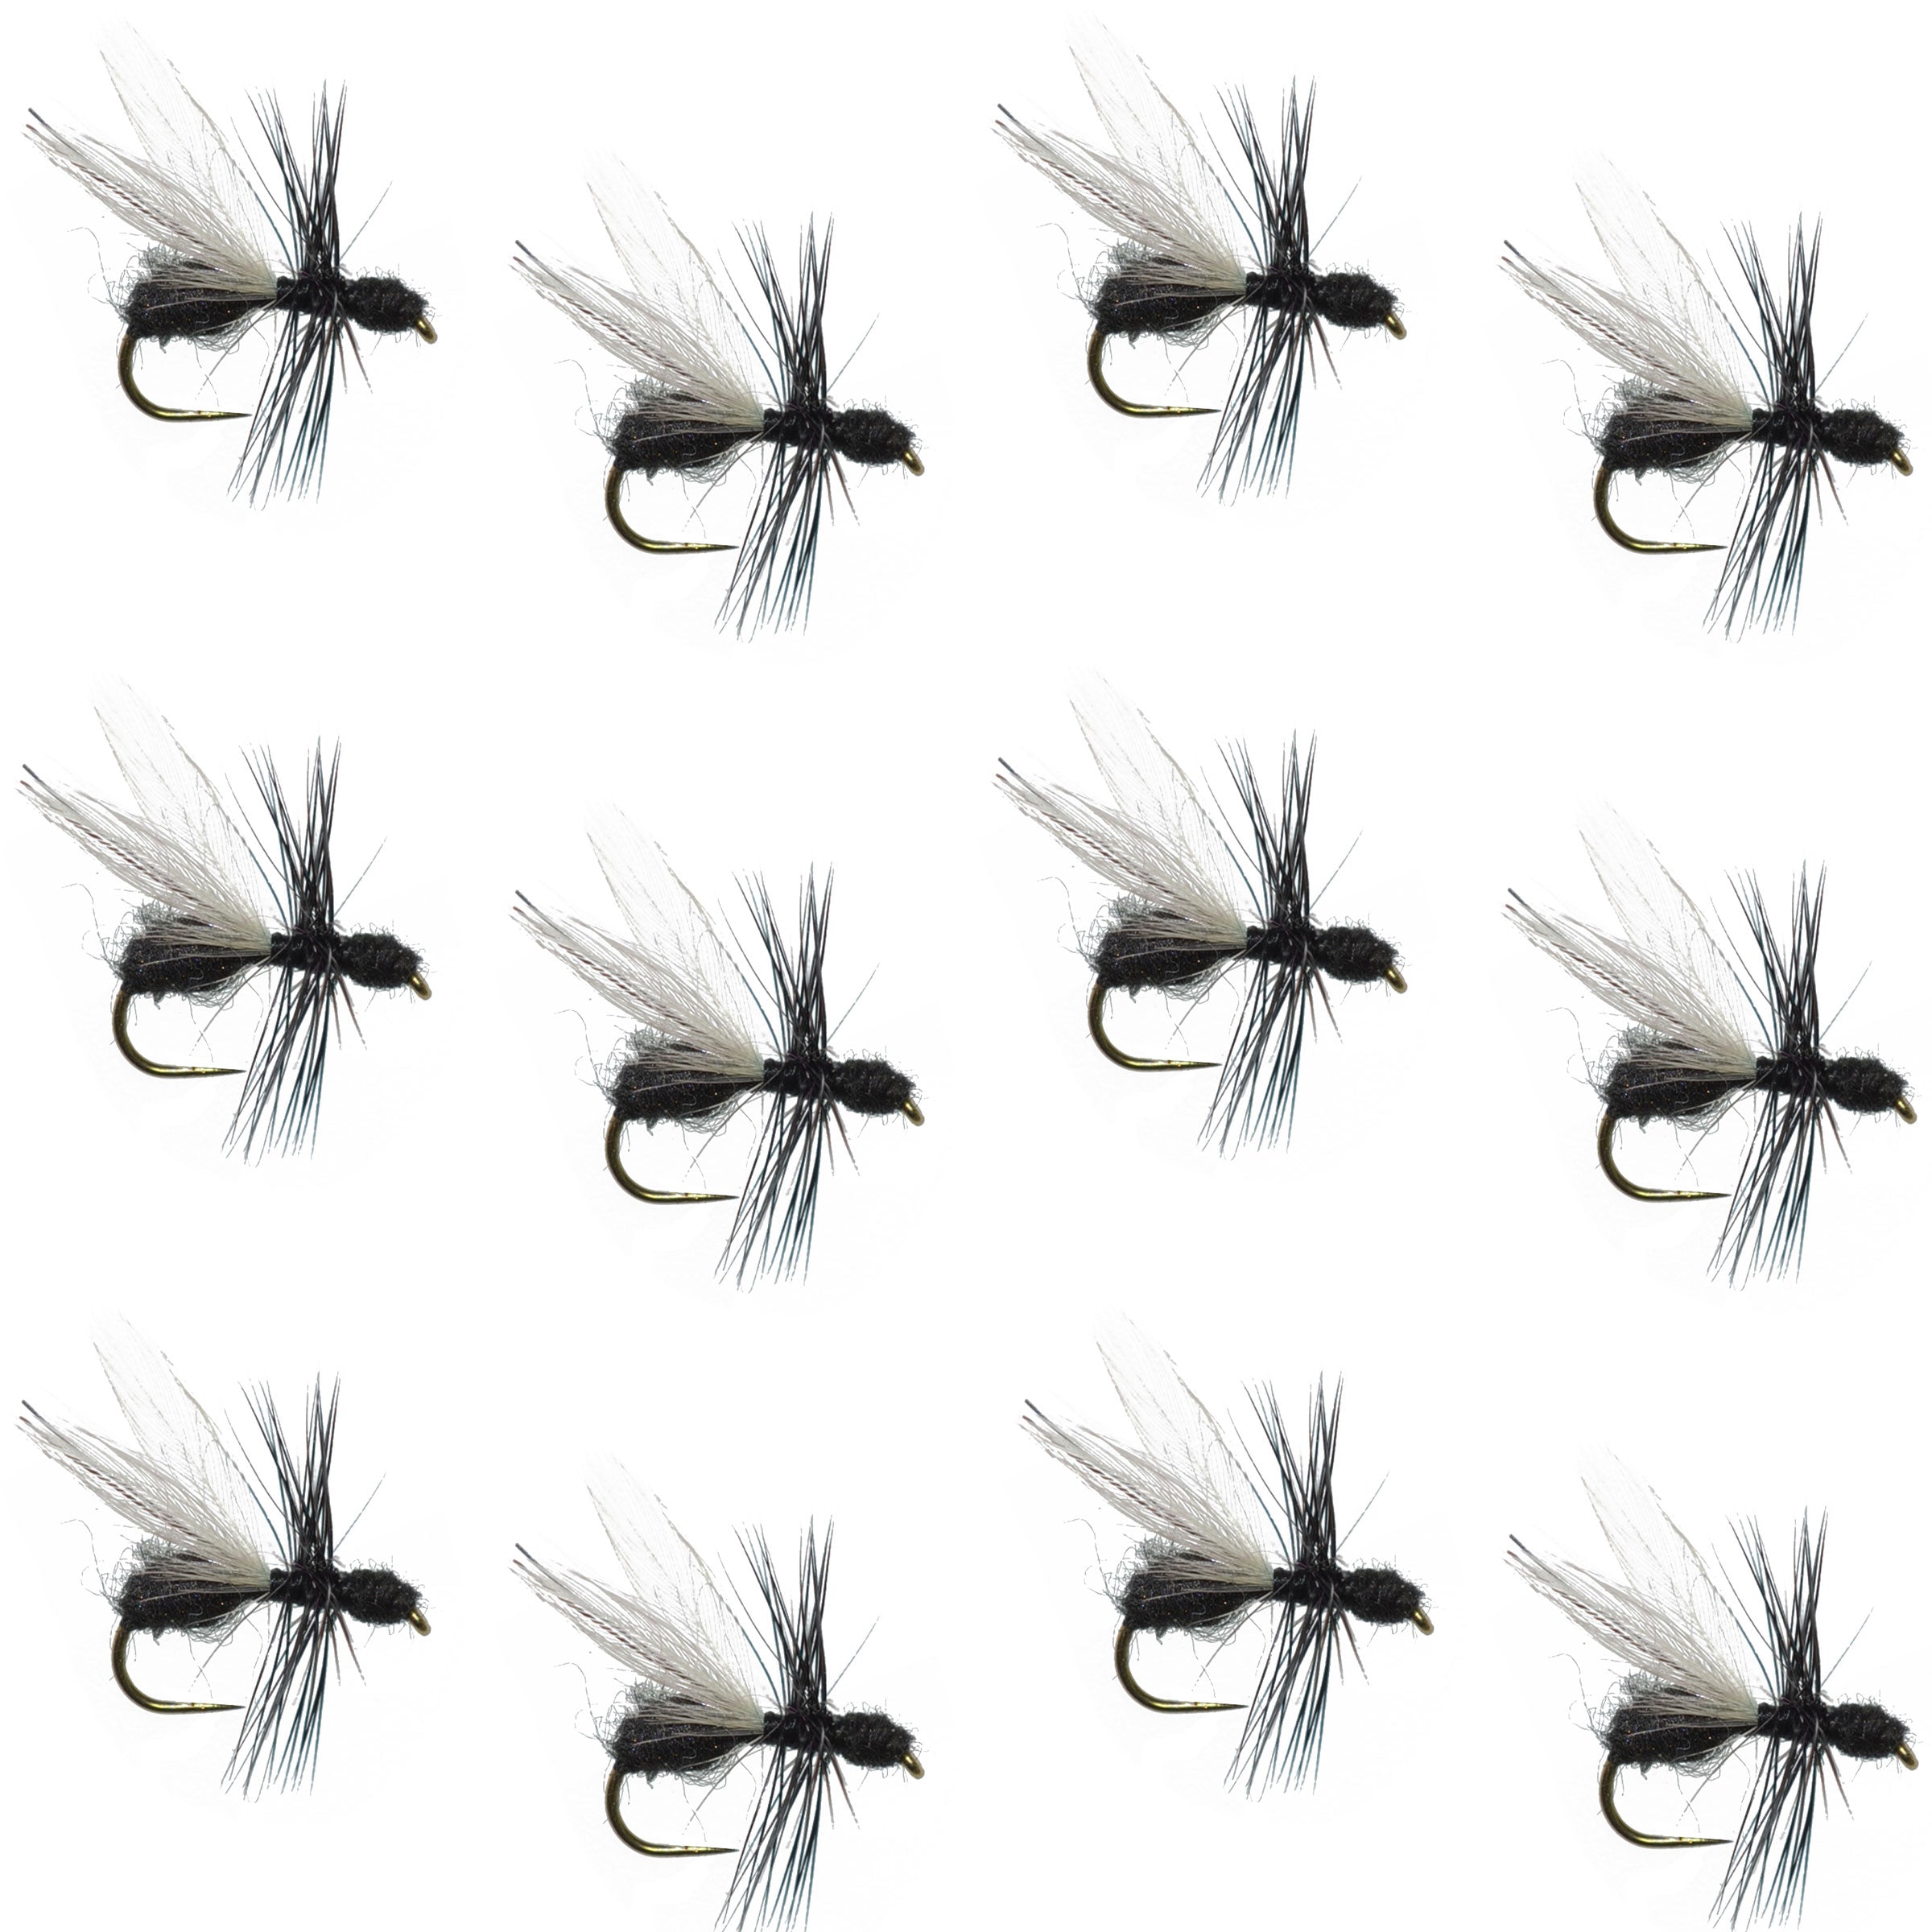 Barbless Black Fur Flying Ant Terrestrial Trout Dry Fly Fishing Flies - 1 Dozen Flies Hook Size 14